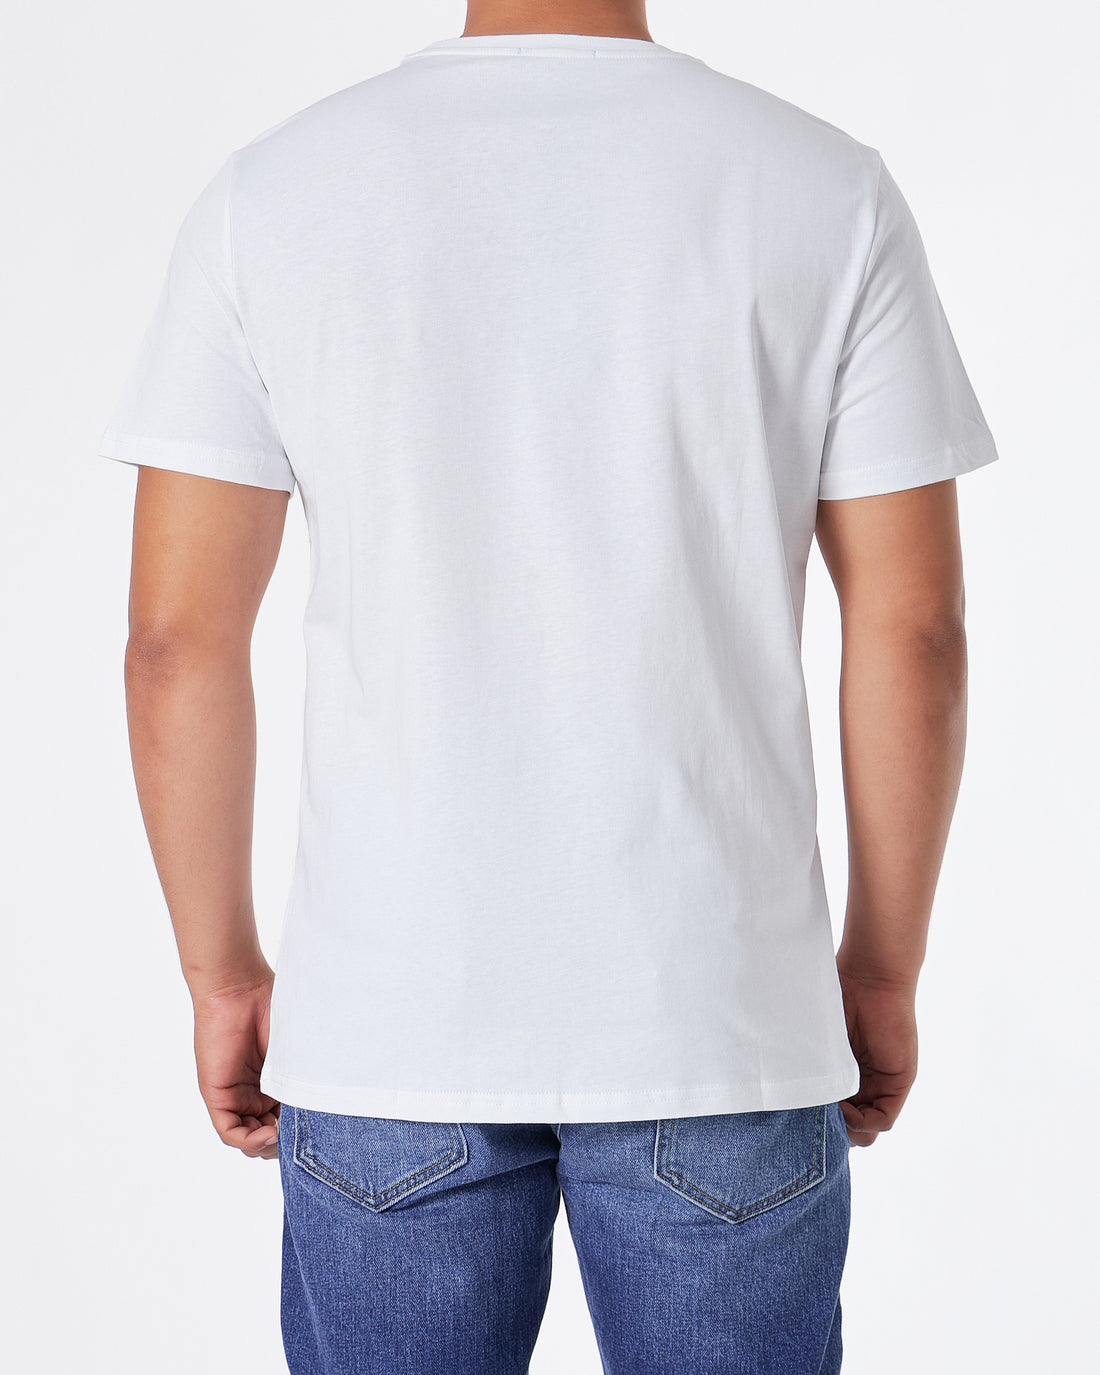 VER Rhinestone Medusa Men White T-Shirt 22.90